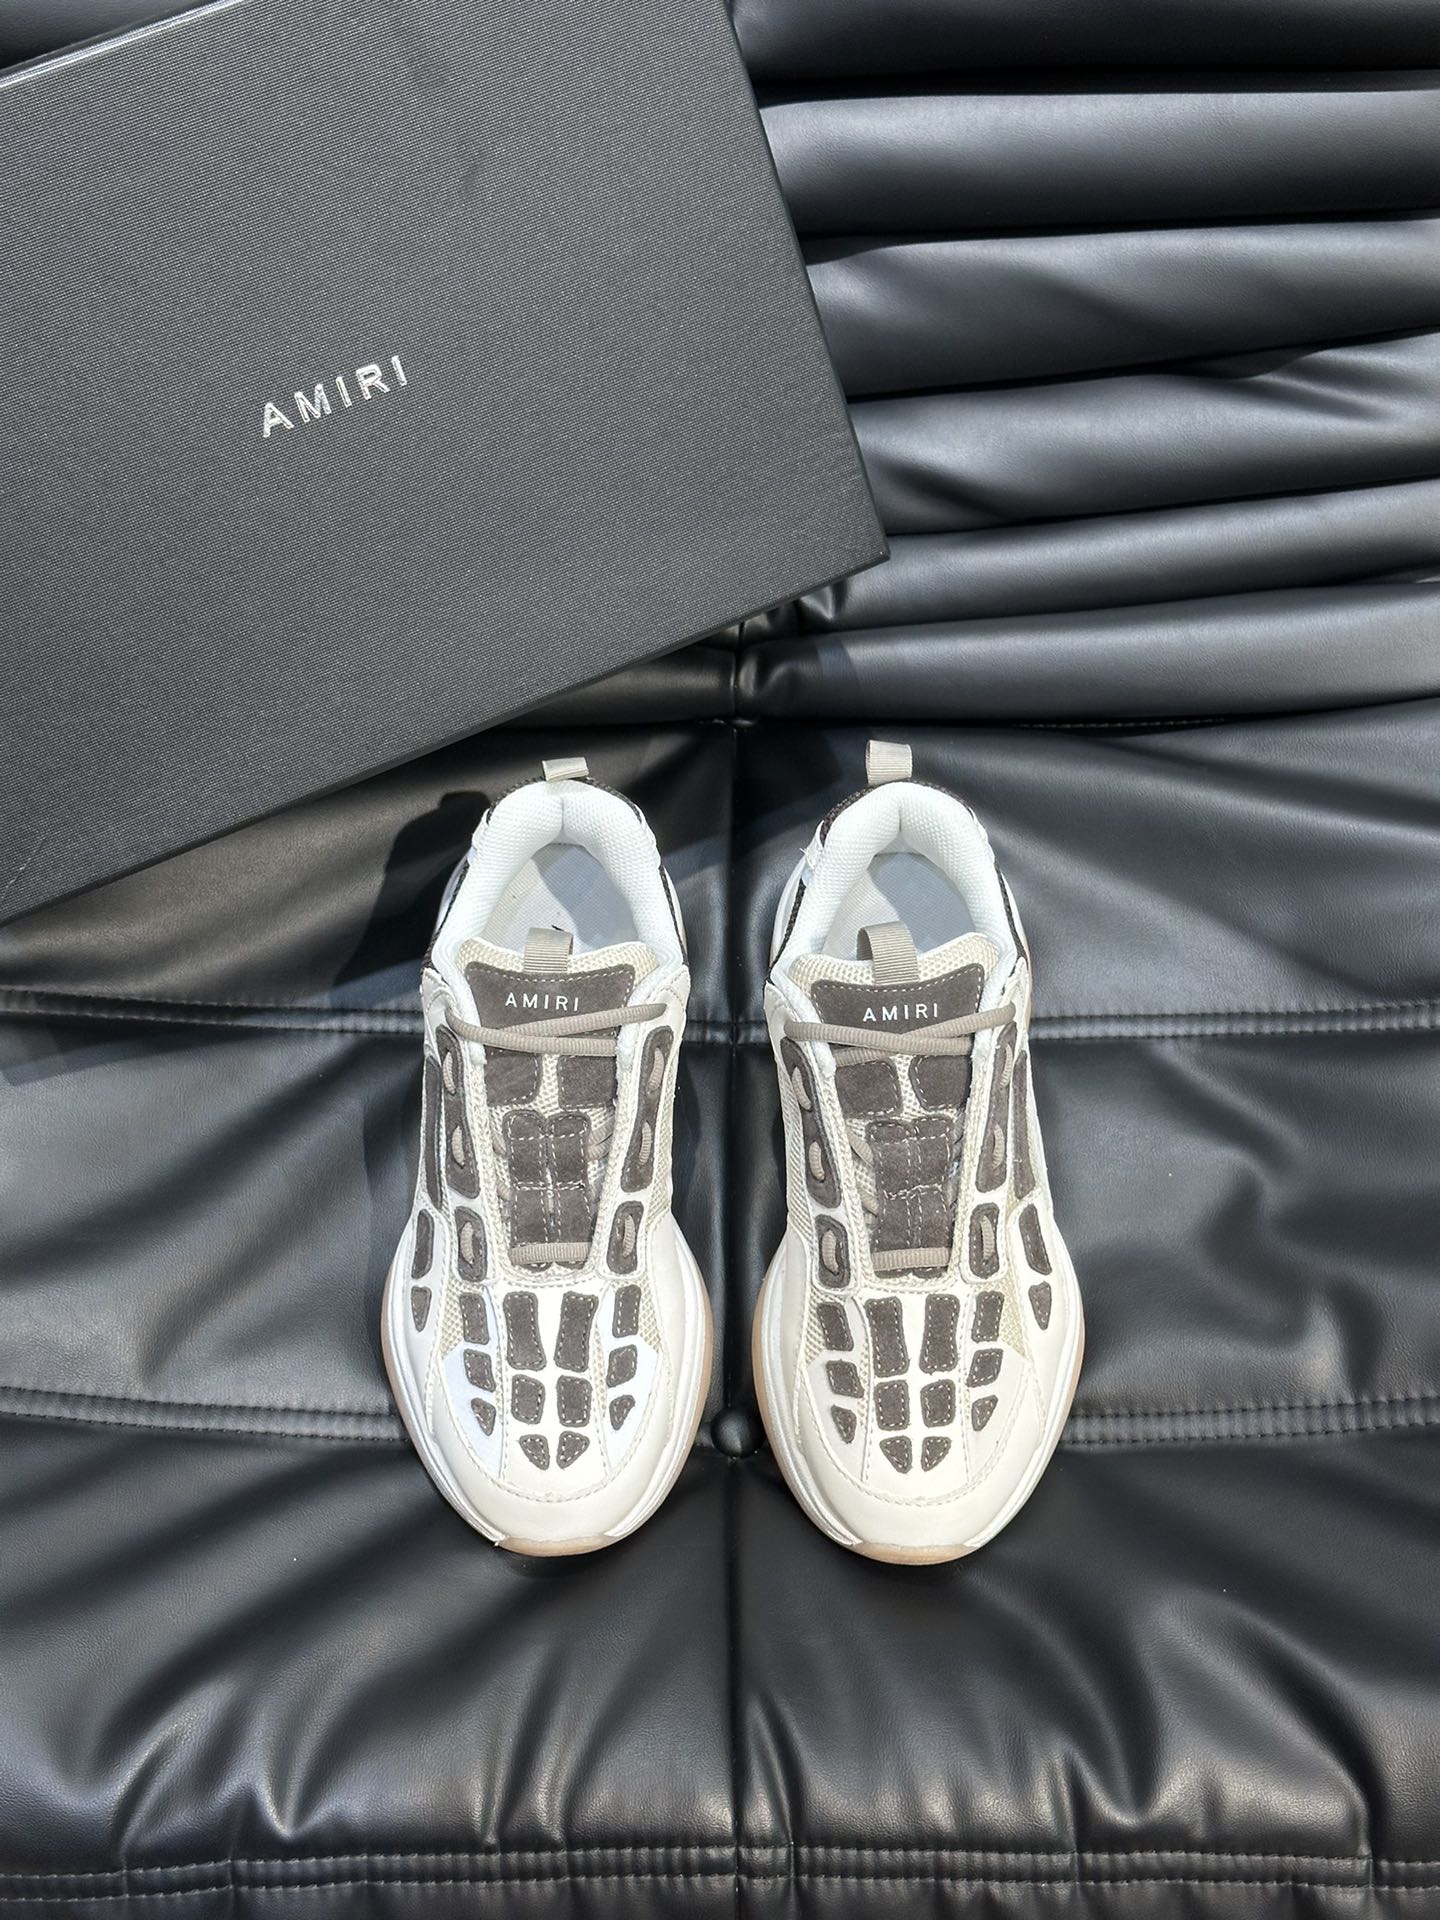 AMIRI骨骼鞋最新运动鞋原版开发采用麂皮以及牛皮加上高密度网布原TPU鞋底开模鞋面上的骨骼麂皮切割超级